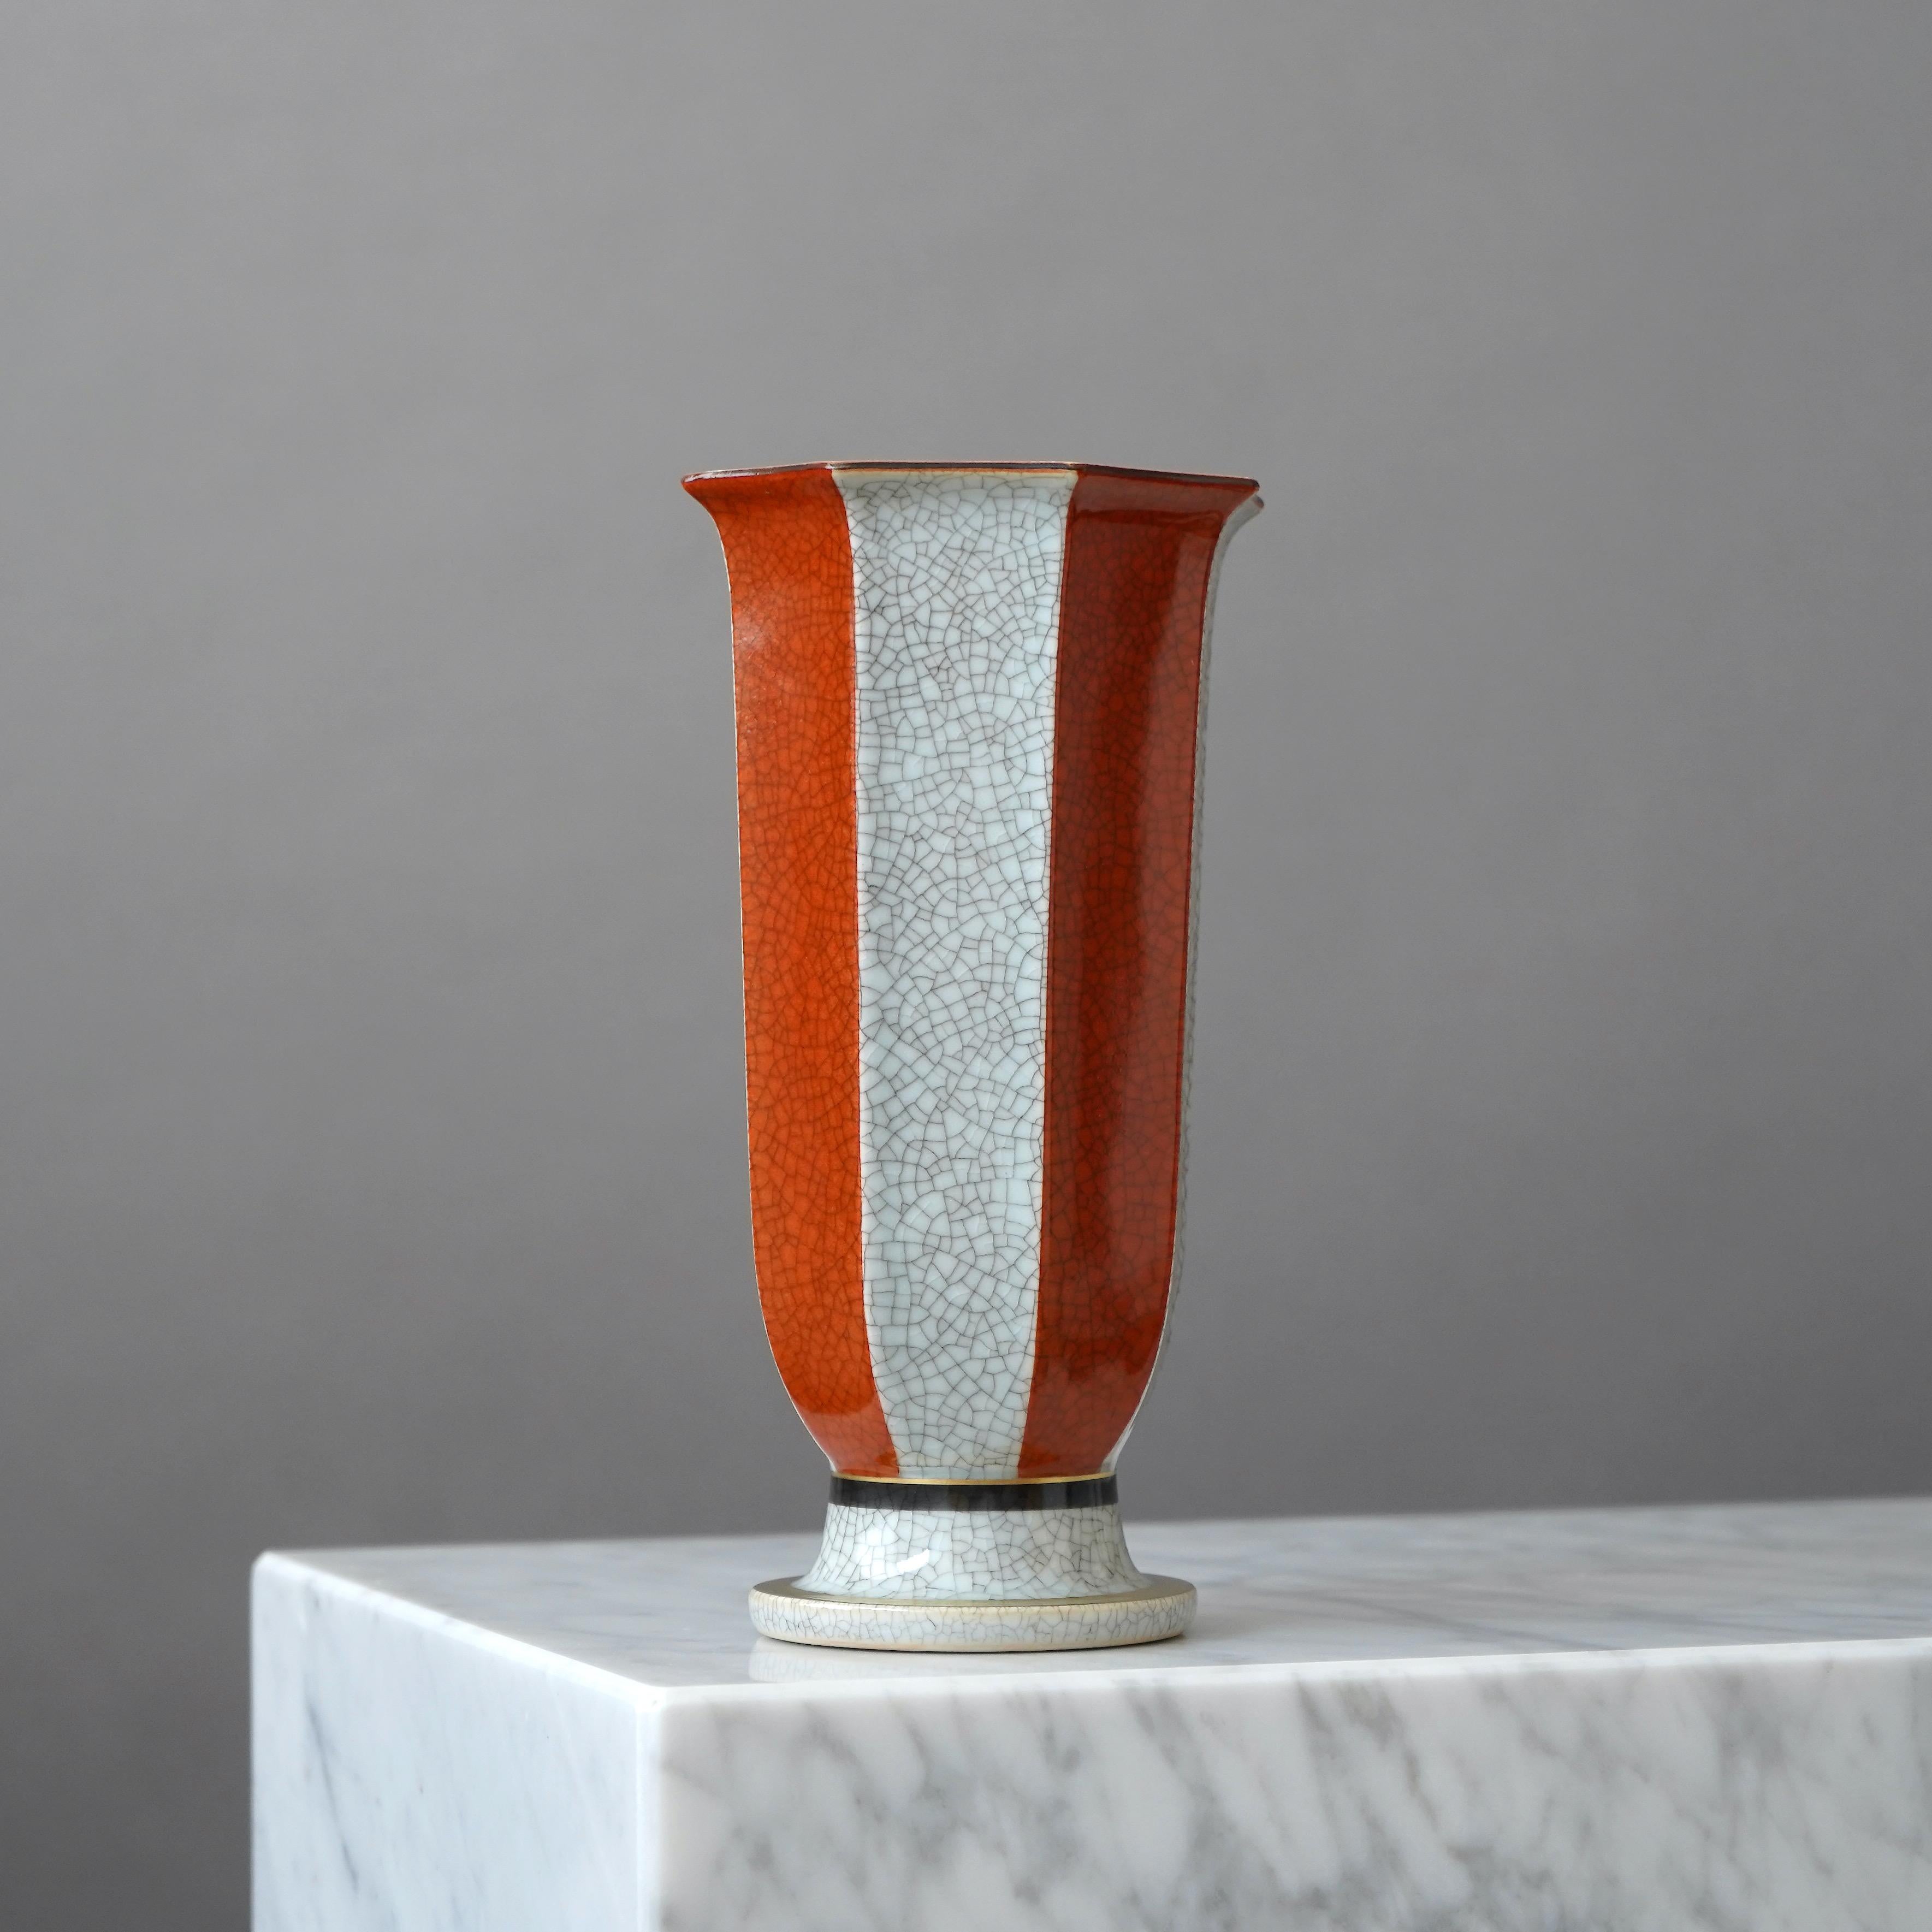 Elegant Royal Copenhagen crackle glazed vase with gilded banding on the base.
Designed by THORKILD OLSEN (1890-1973) for ROYAL COPENHAGEN. Made in Denmark, 1950s.

Great condition. The vase is slightly crooked. 
Makers marks on base of vase.